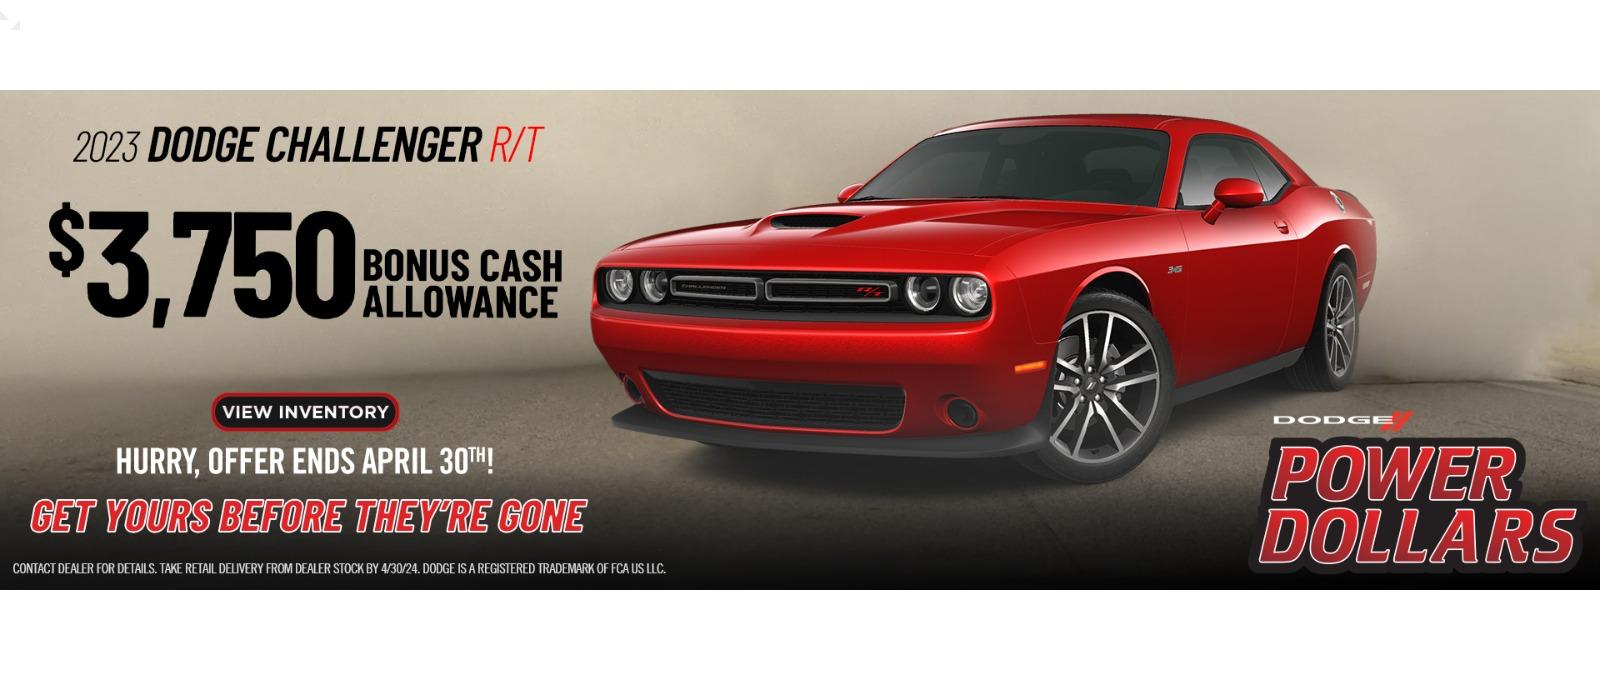 2023 Dodge Challenger R/T
$3,750 bonus cash allowance